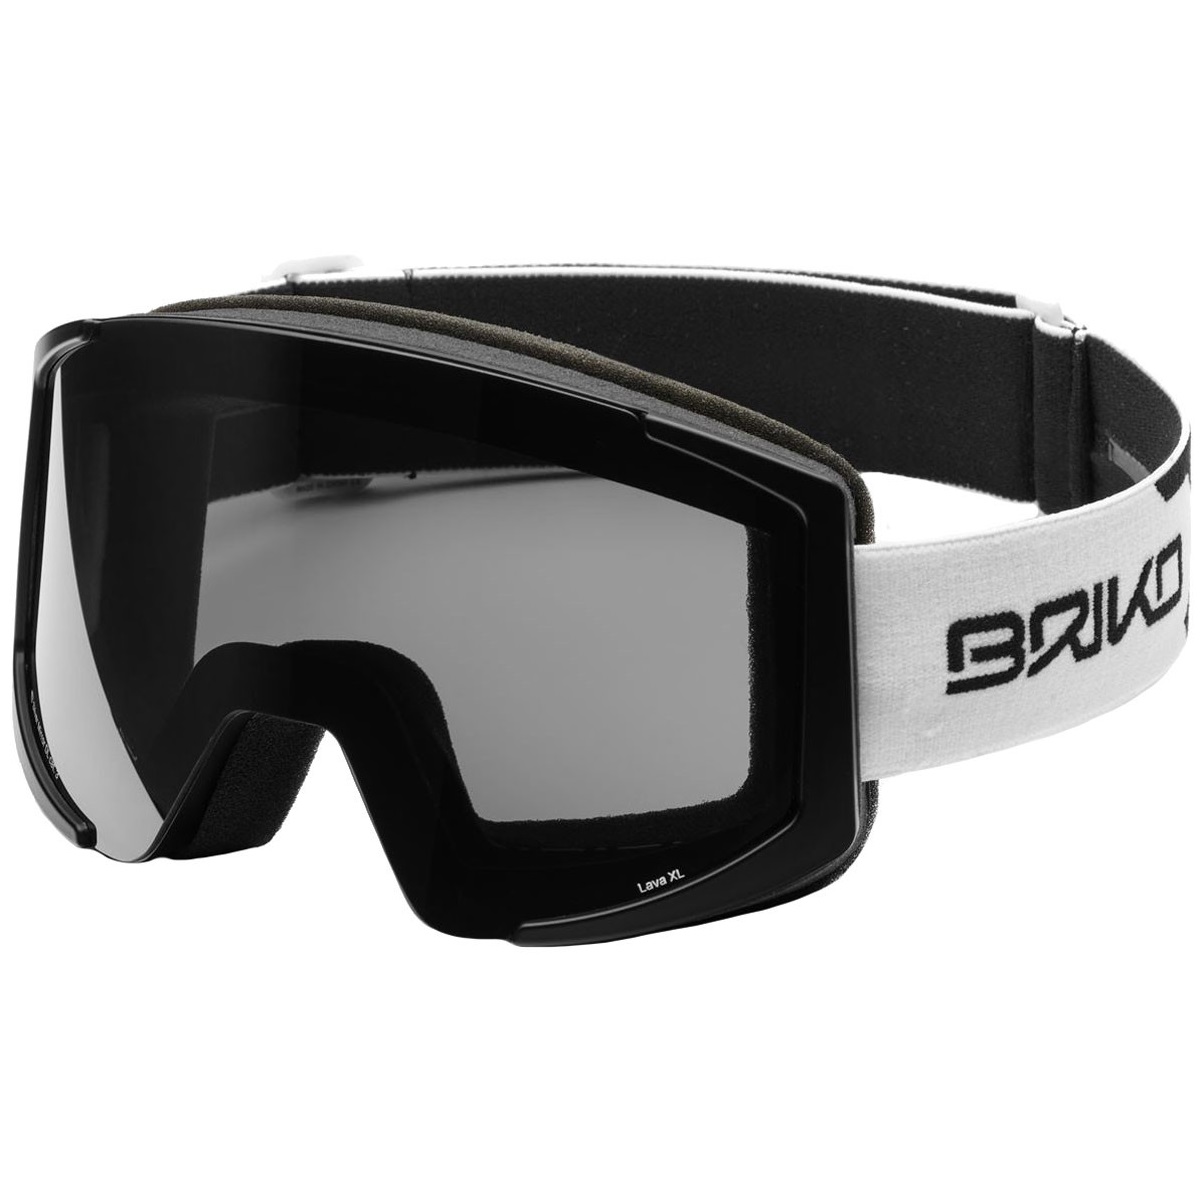  Snowboard Goggles	 -  briko LAVA XL 2 LENSES